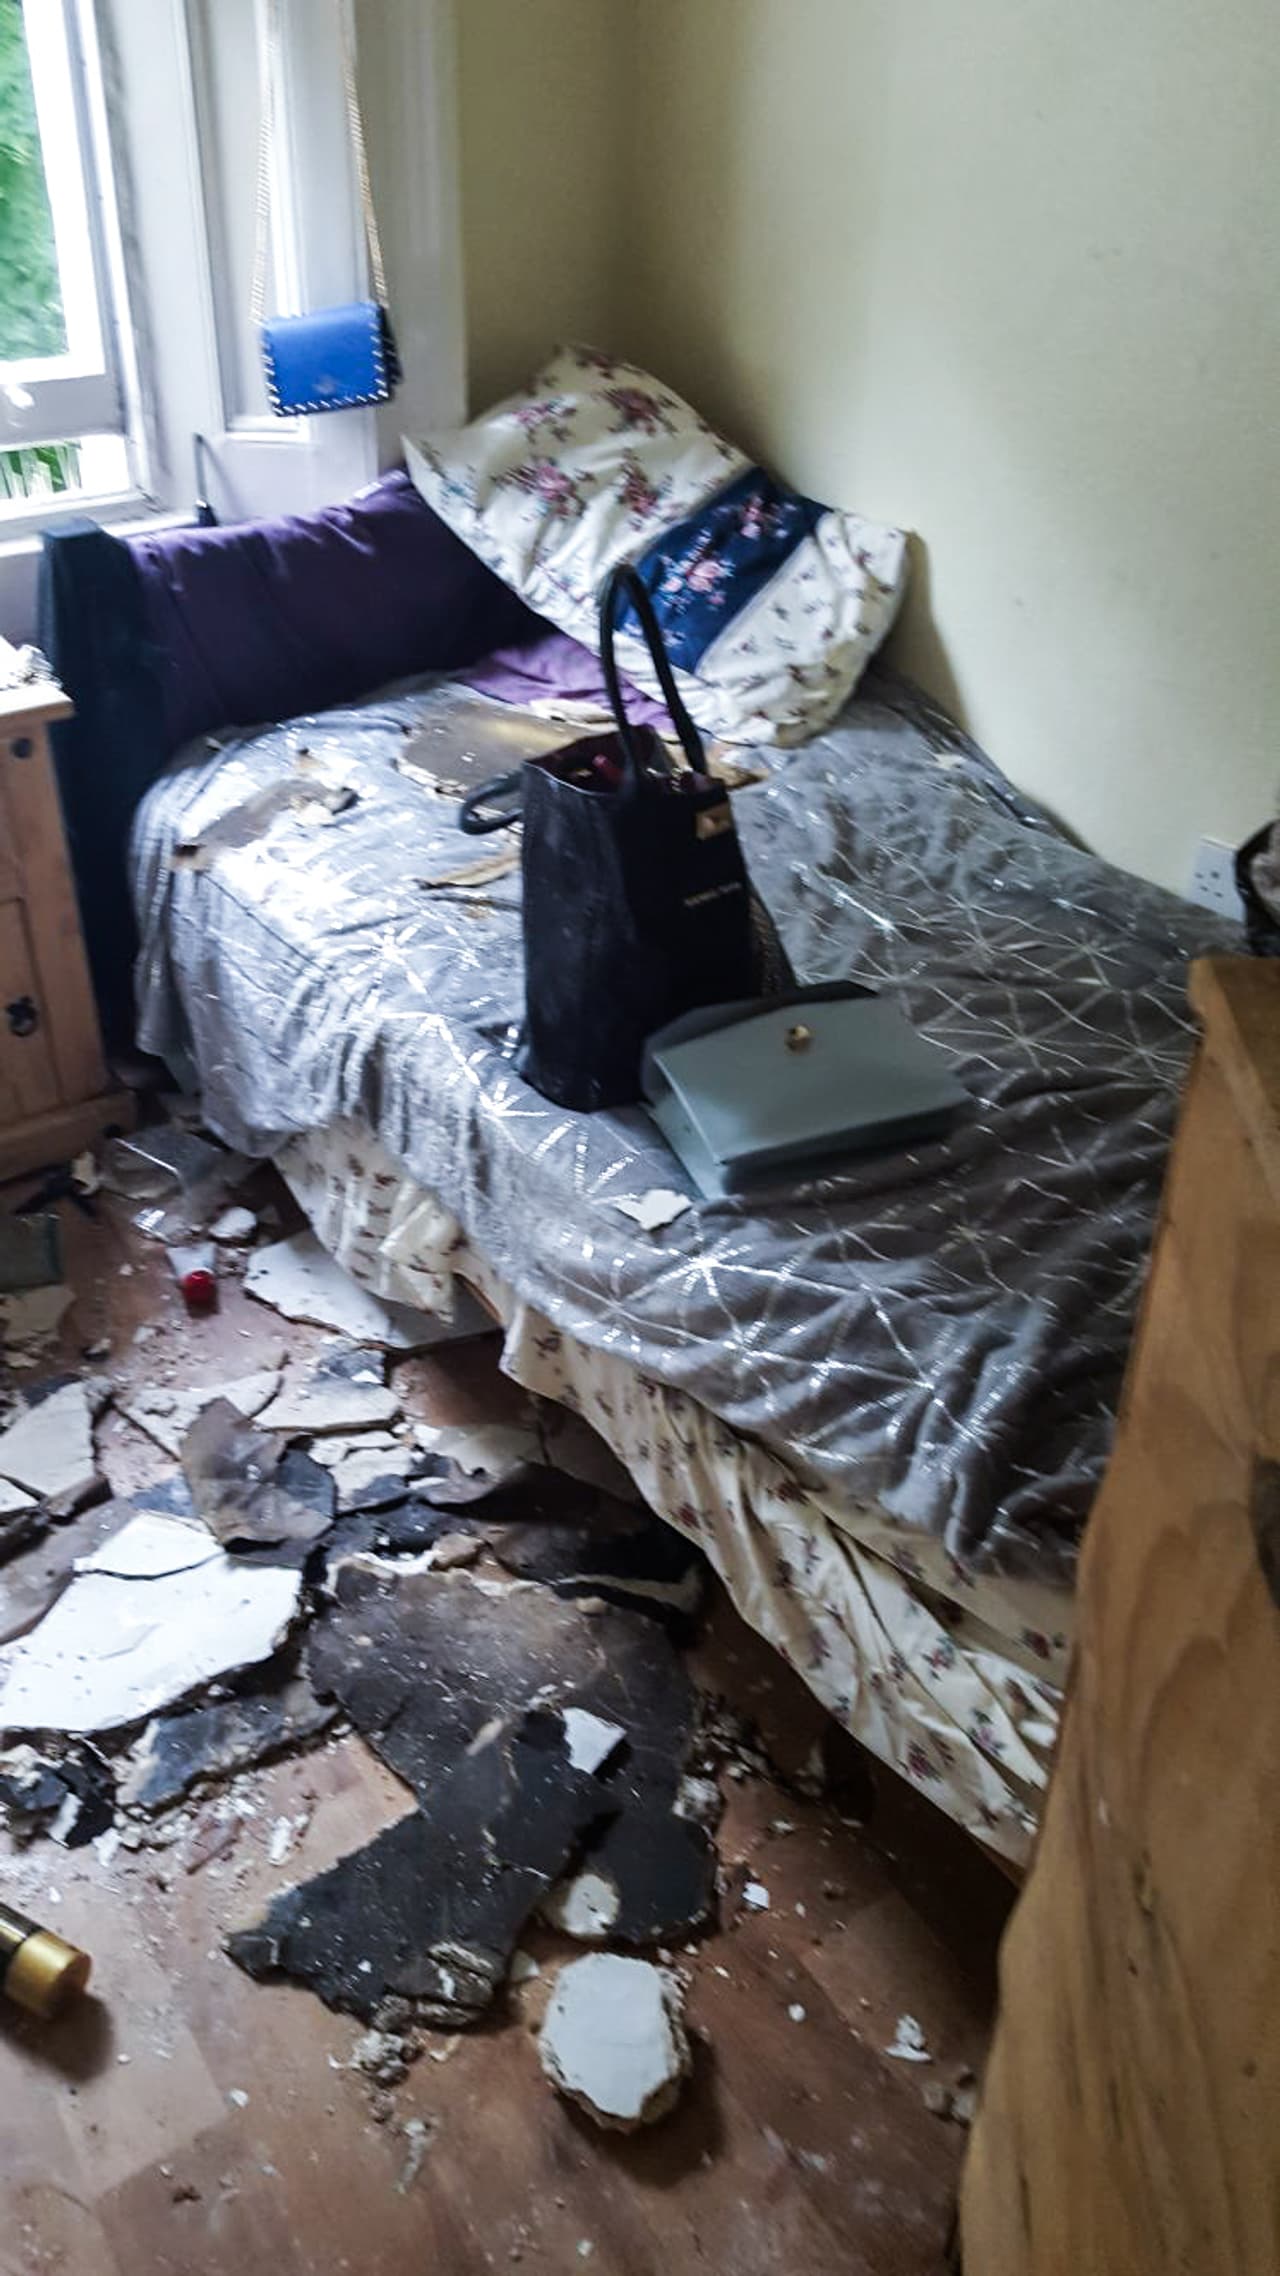 An image of damaged belongings at the refuge